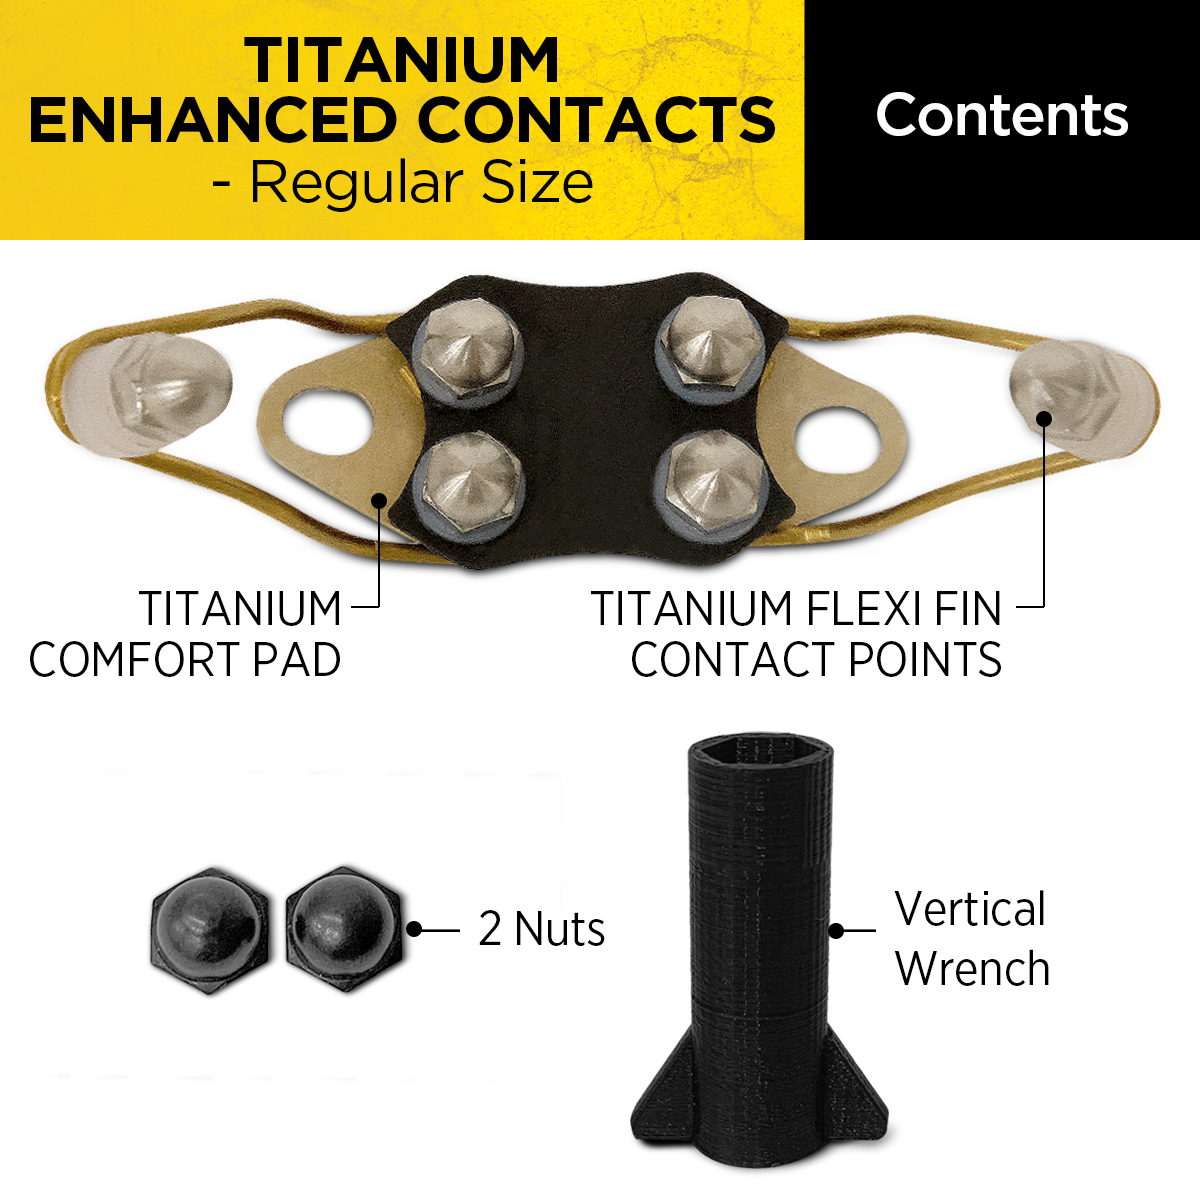 TITANIUM ENHANCED CONTACT